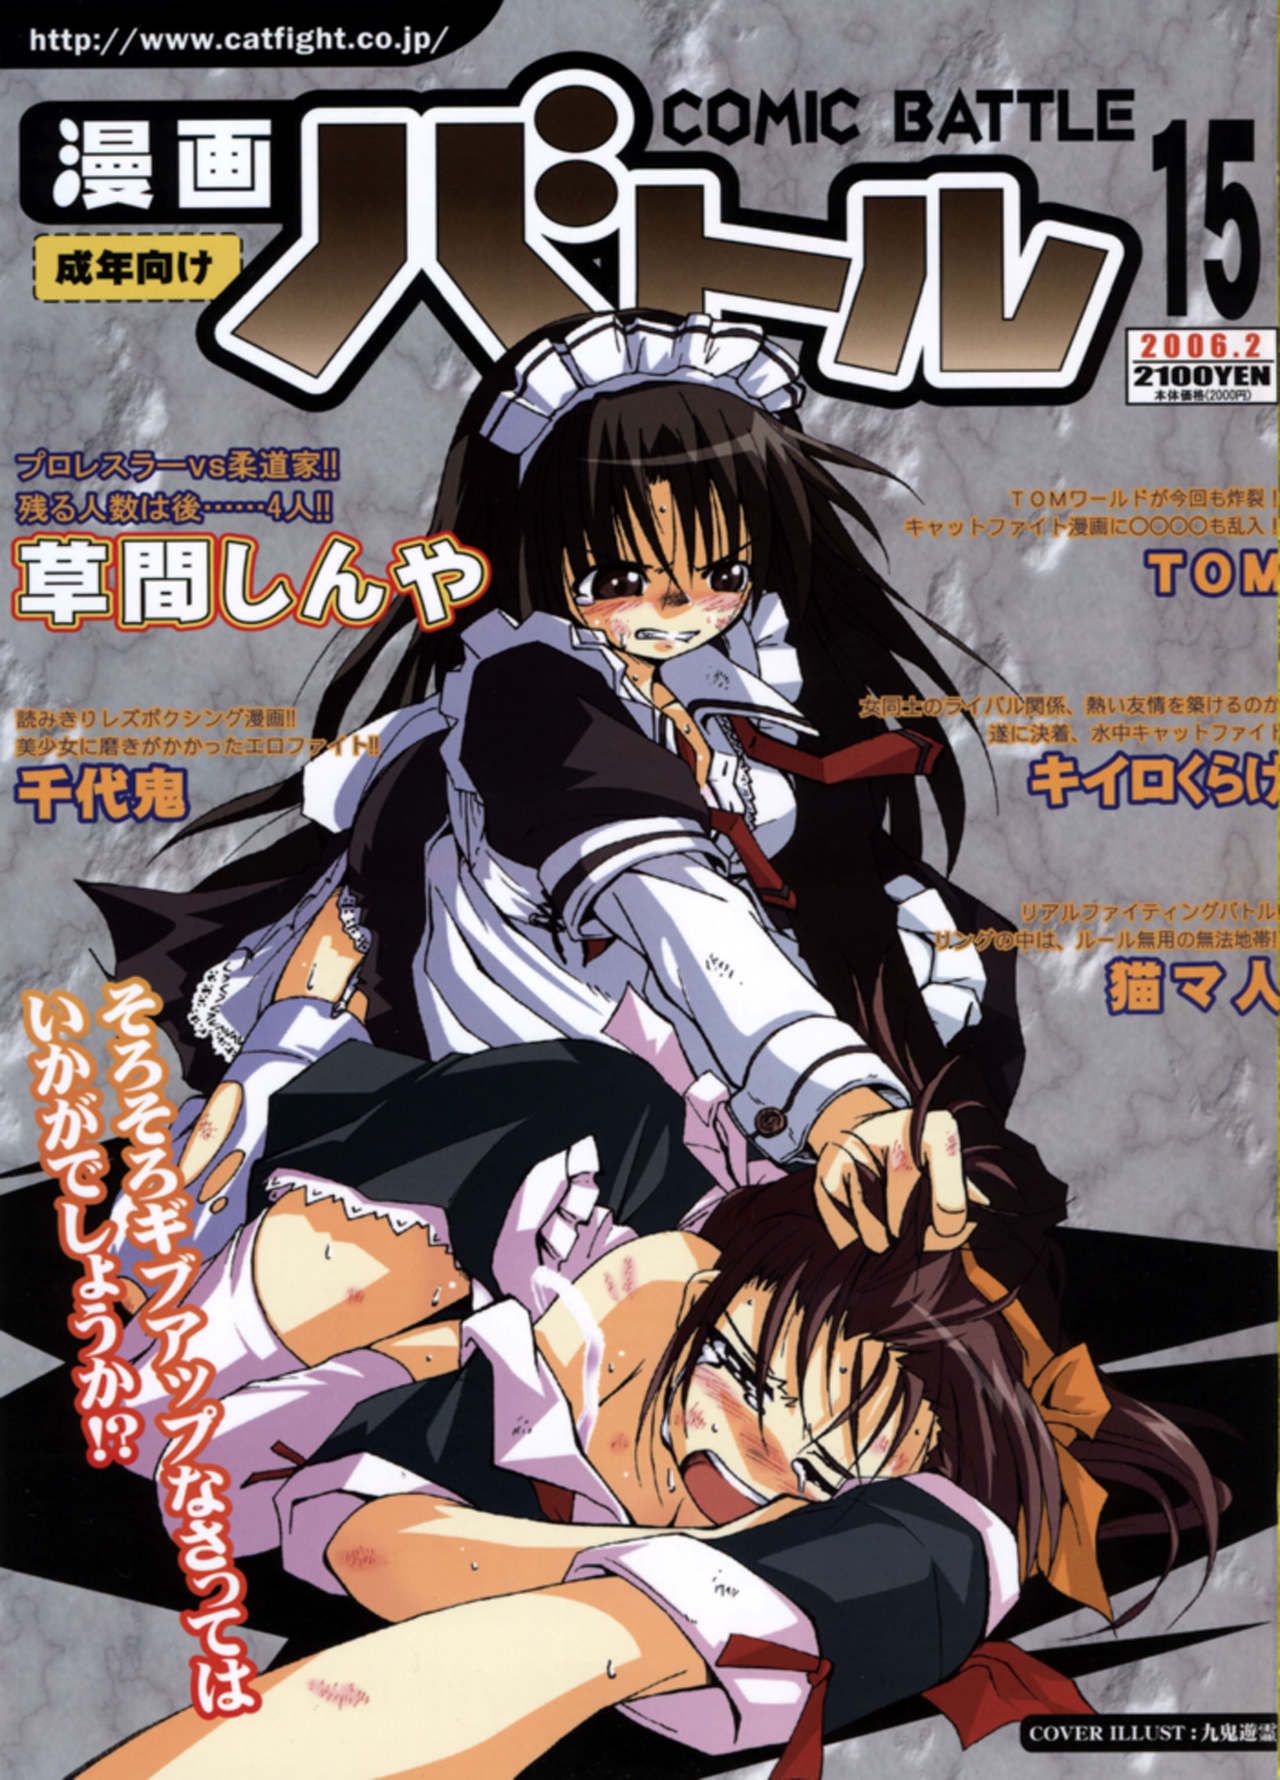 Manga Battle Volume 15 1